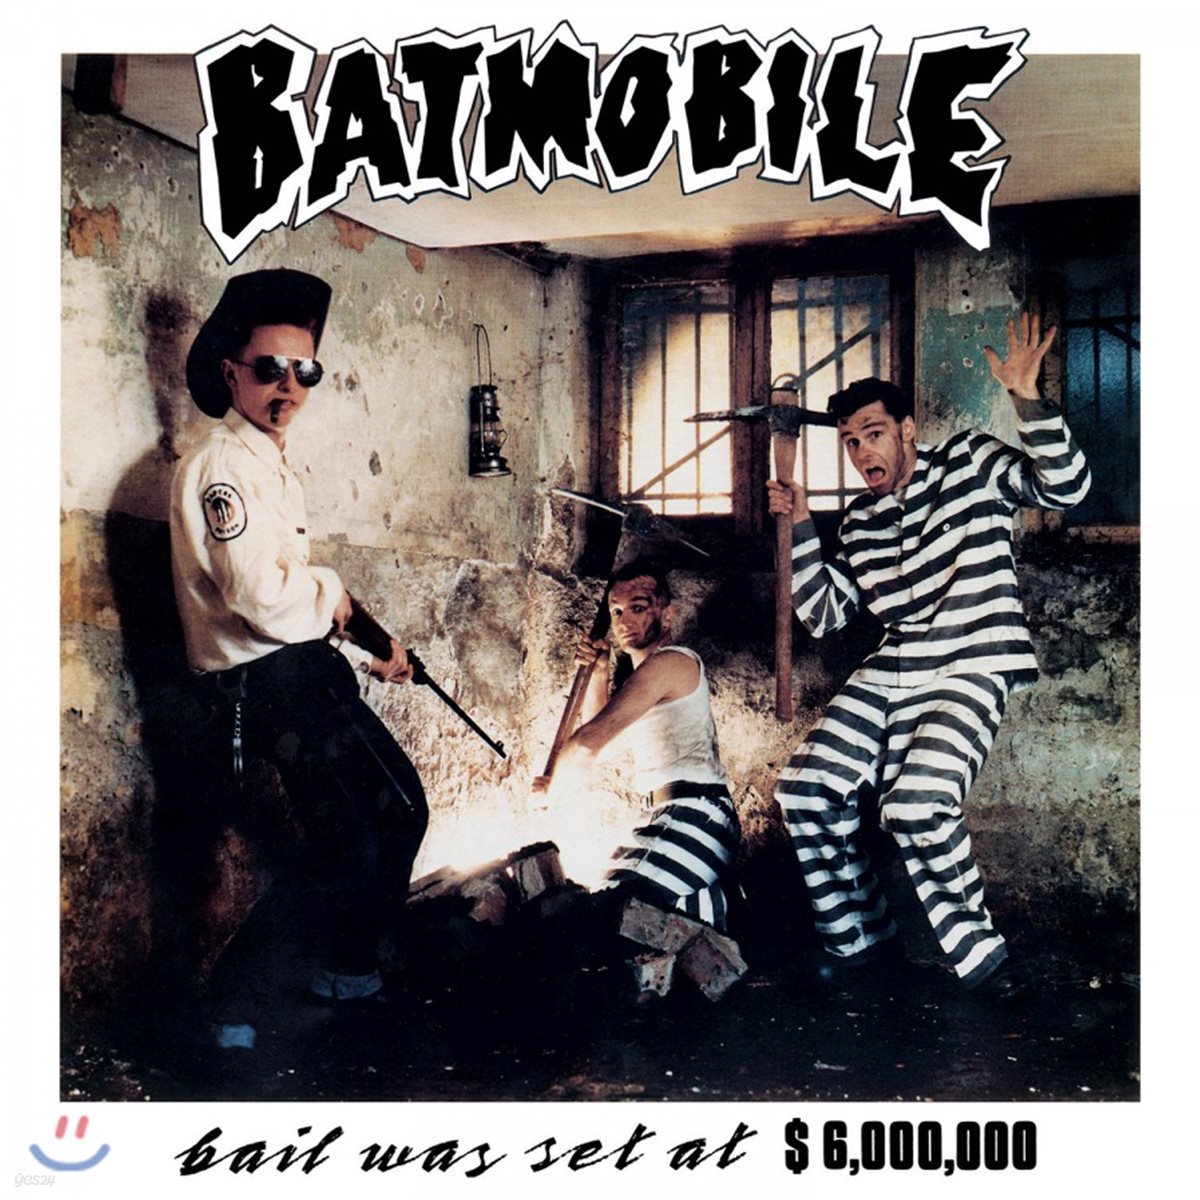 Batmobile (배트모빌) - Bail was set at $6,000,000 [7인치 LP]